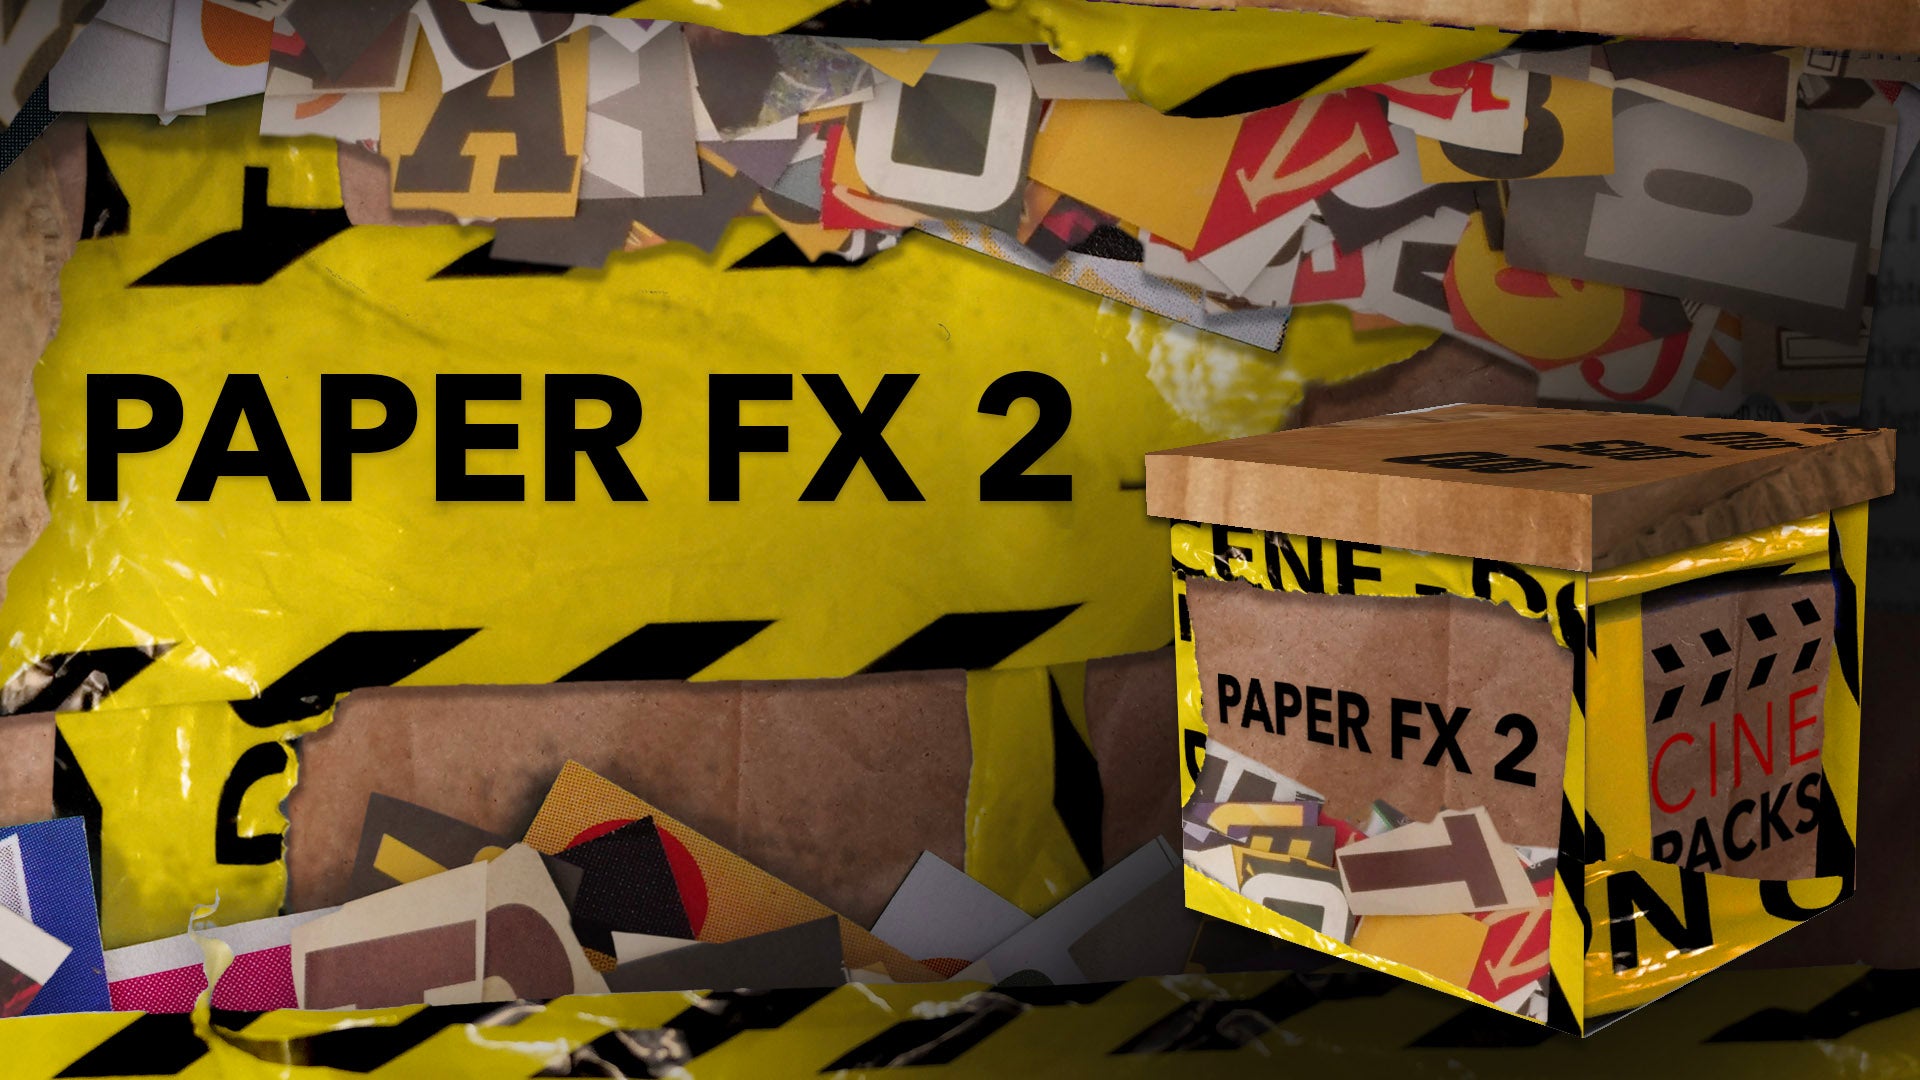 Paper FX 2 - CinePacks